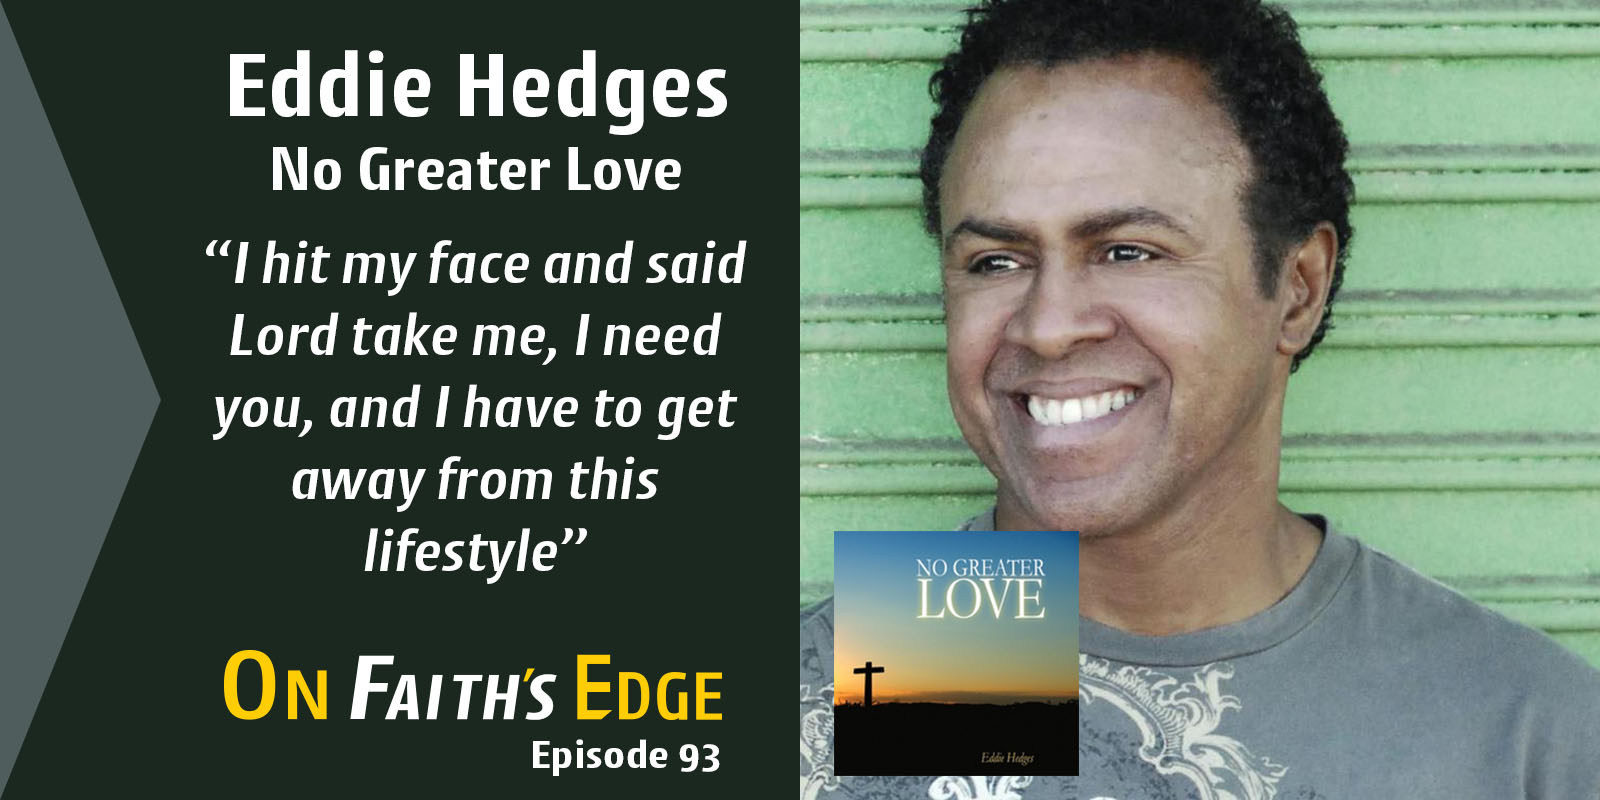 Following Wisdom with Singer-Songwriter Eddie Hedges | Episode 93